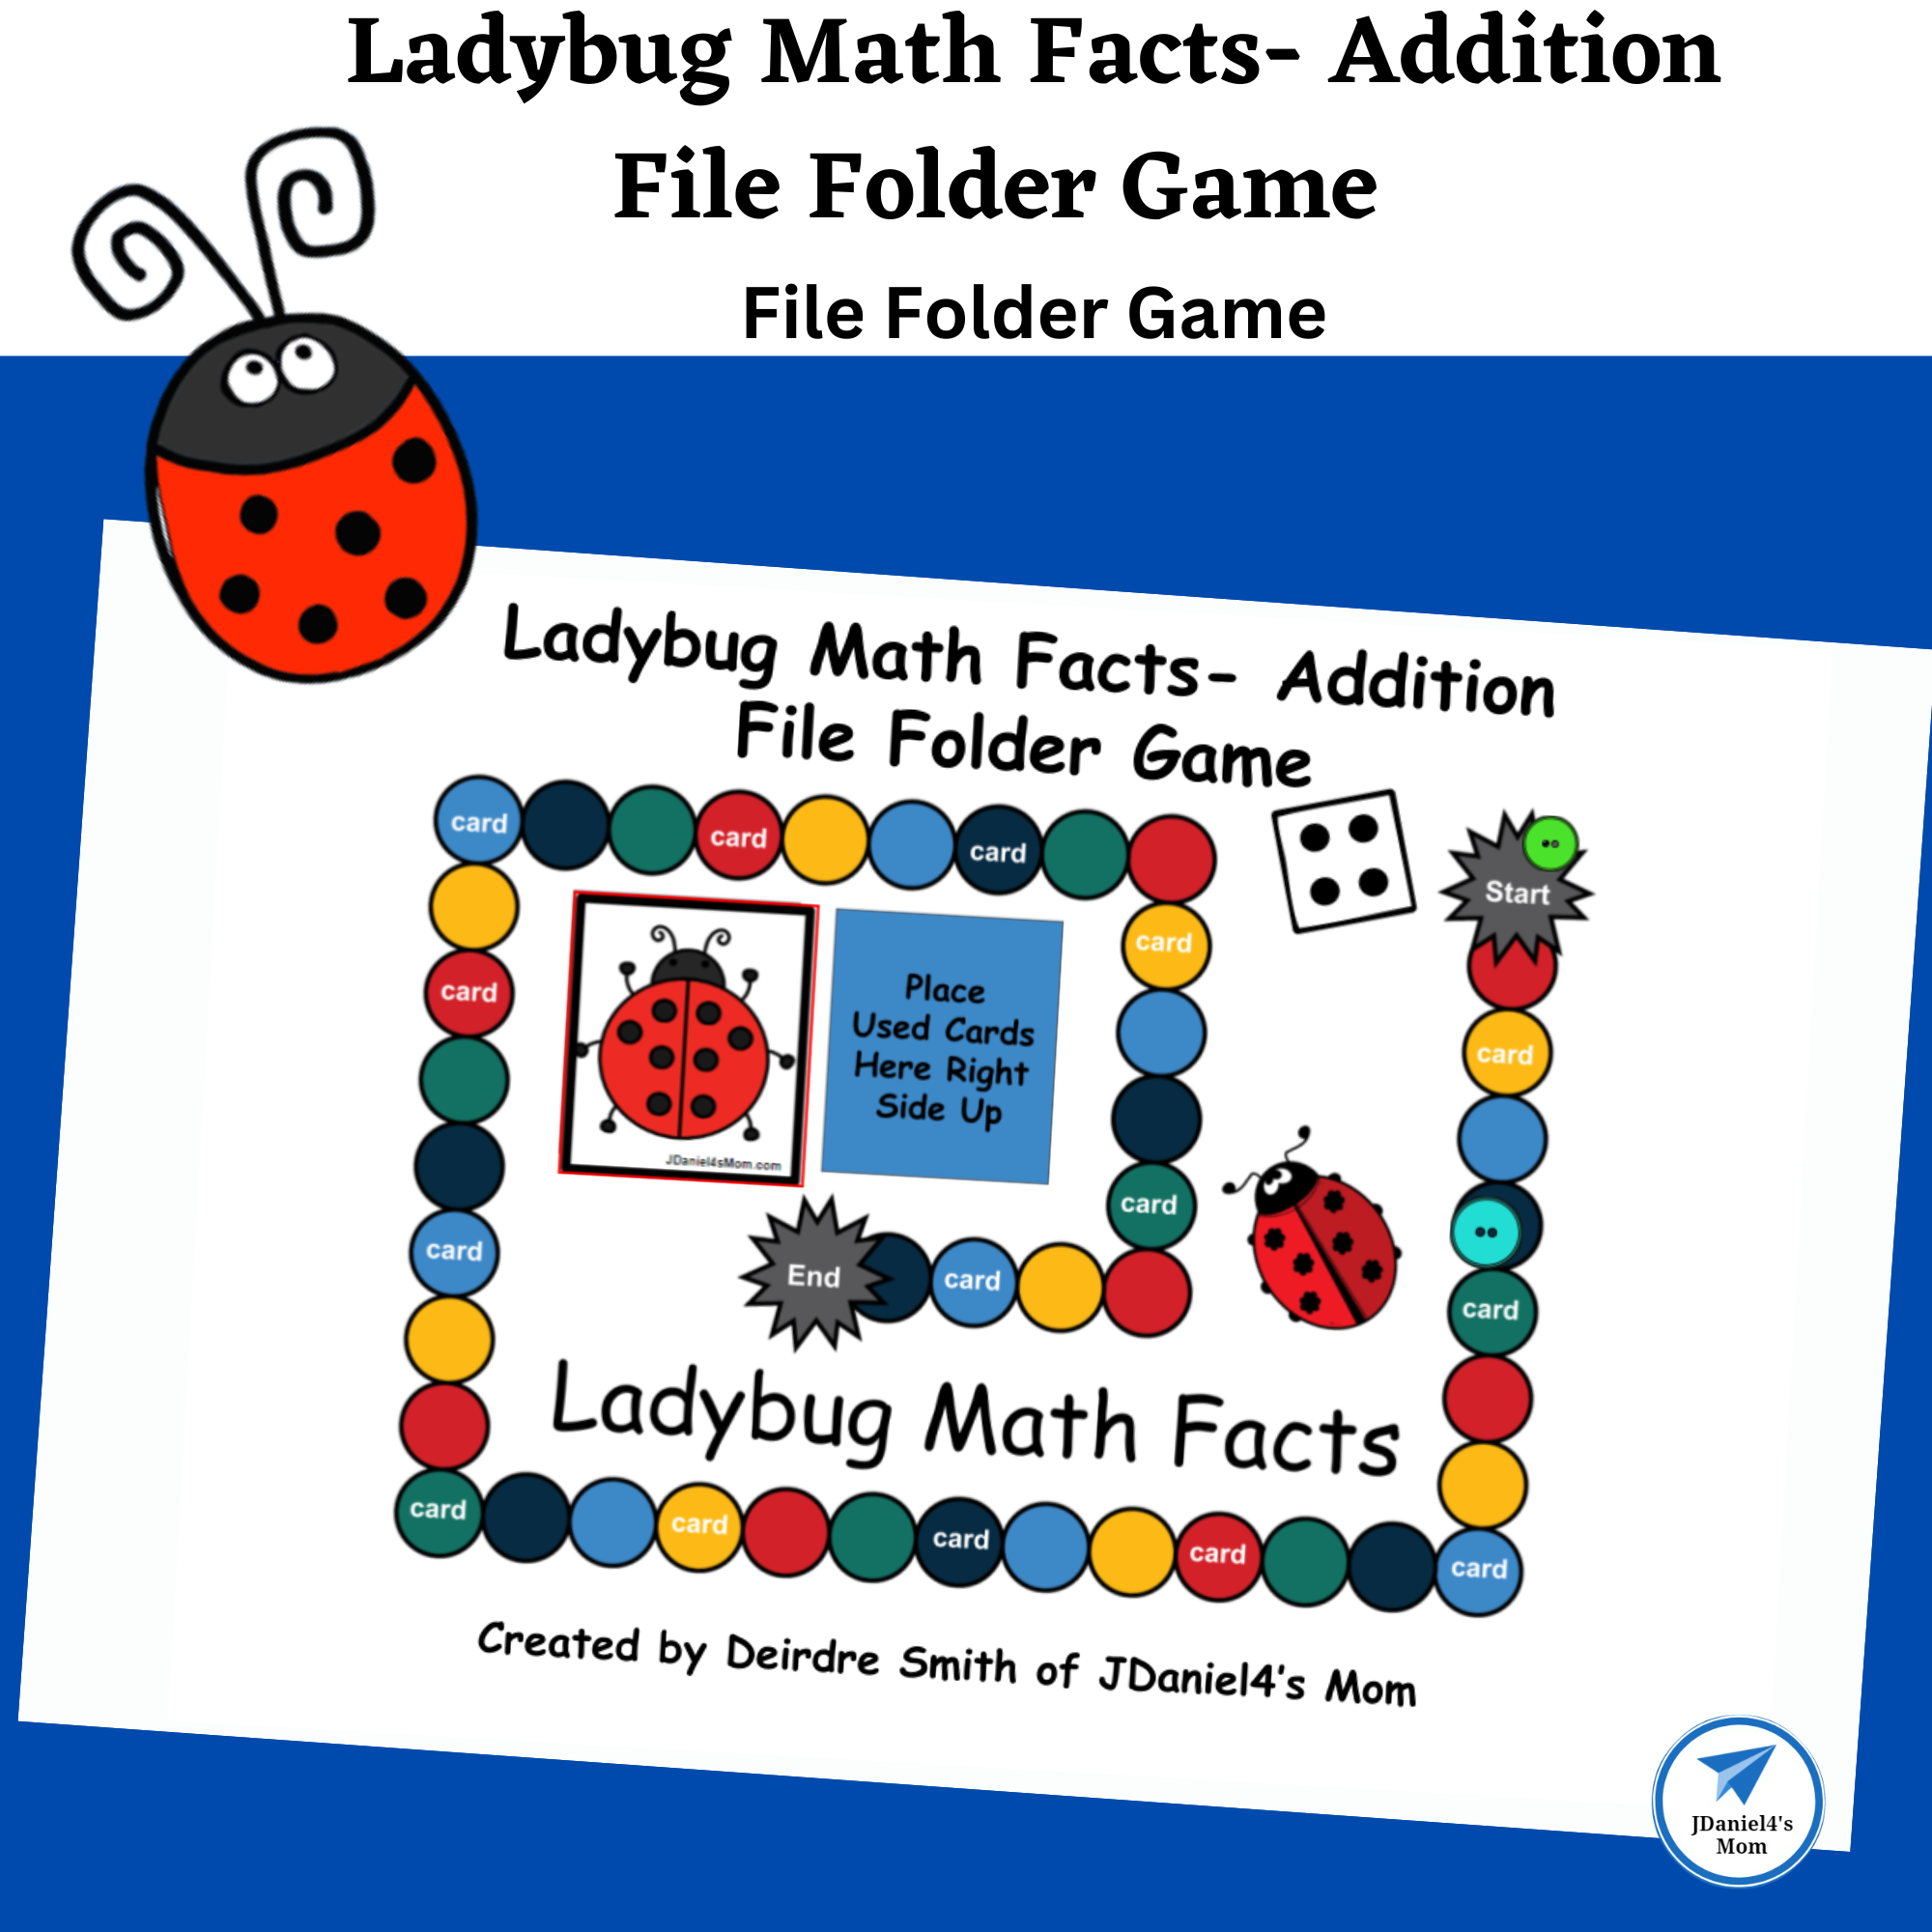 ladybug-math-facts-file-folder-game-addition-jdaniel4s-mom